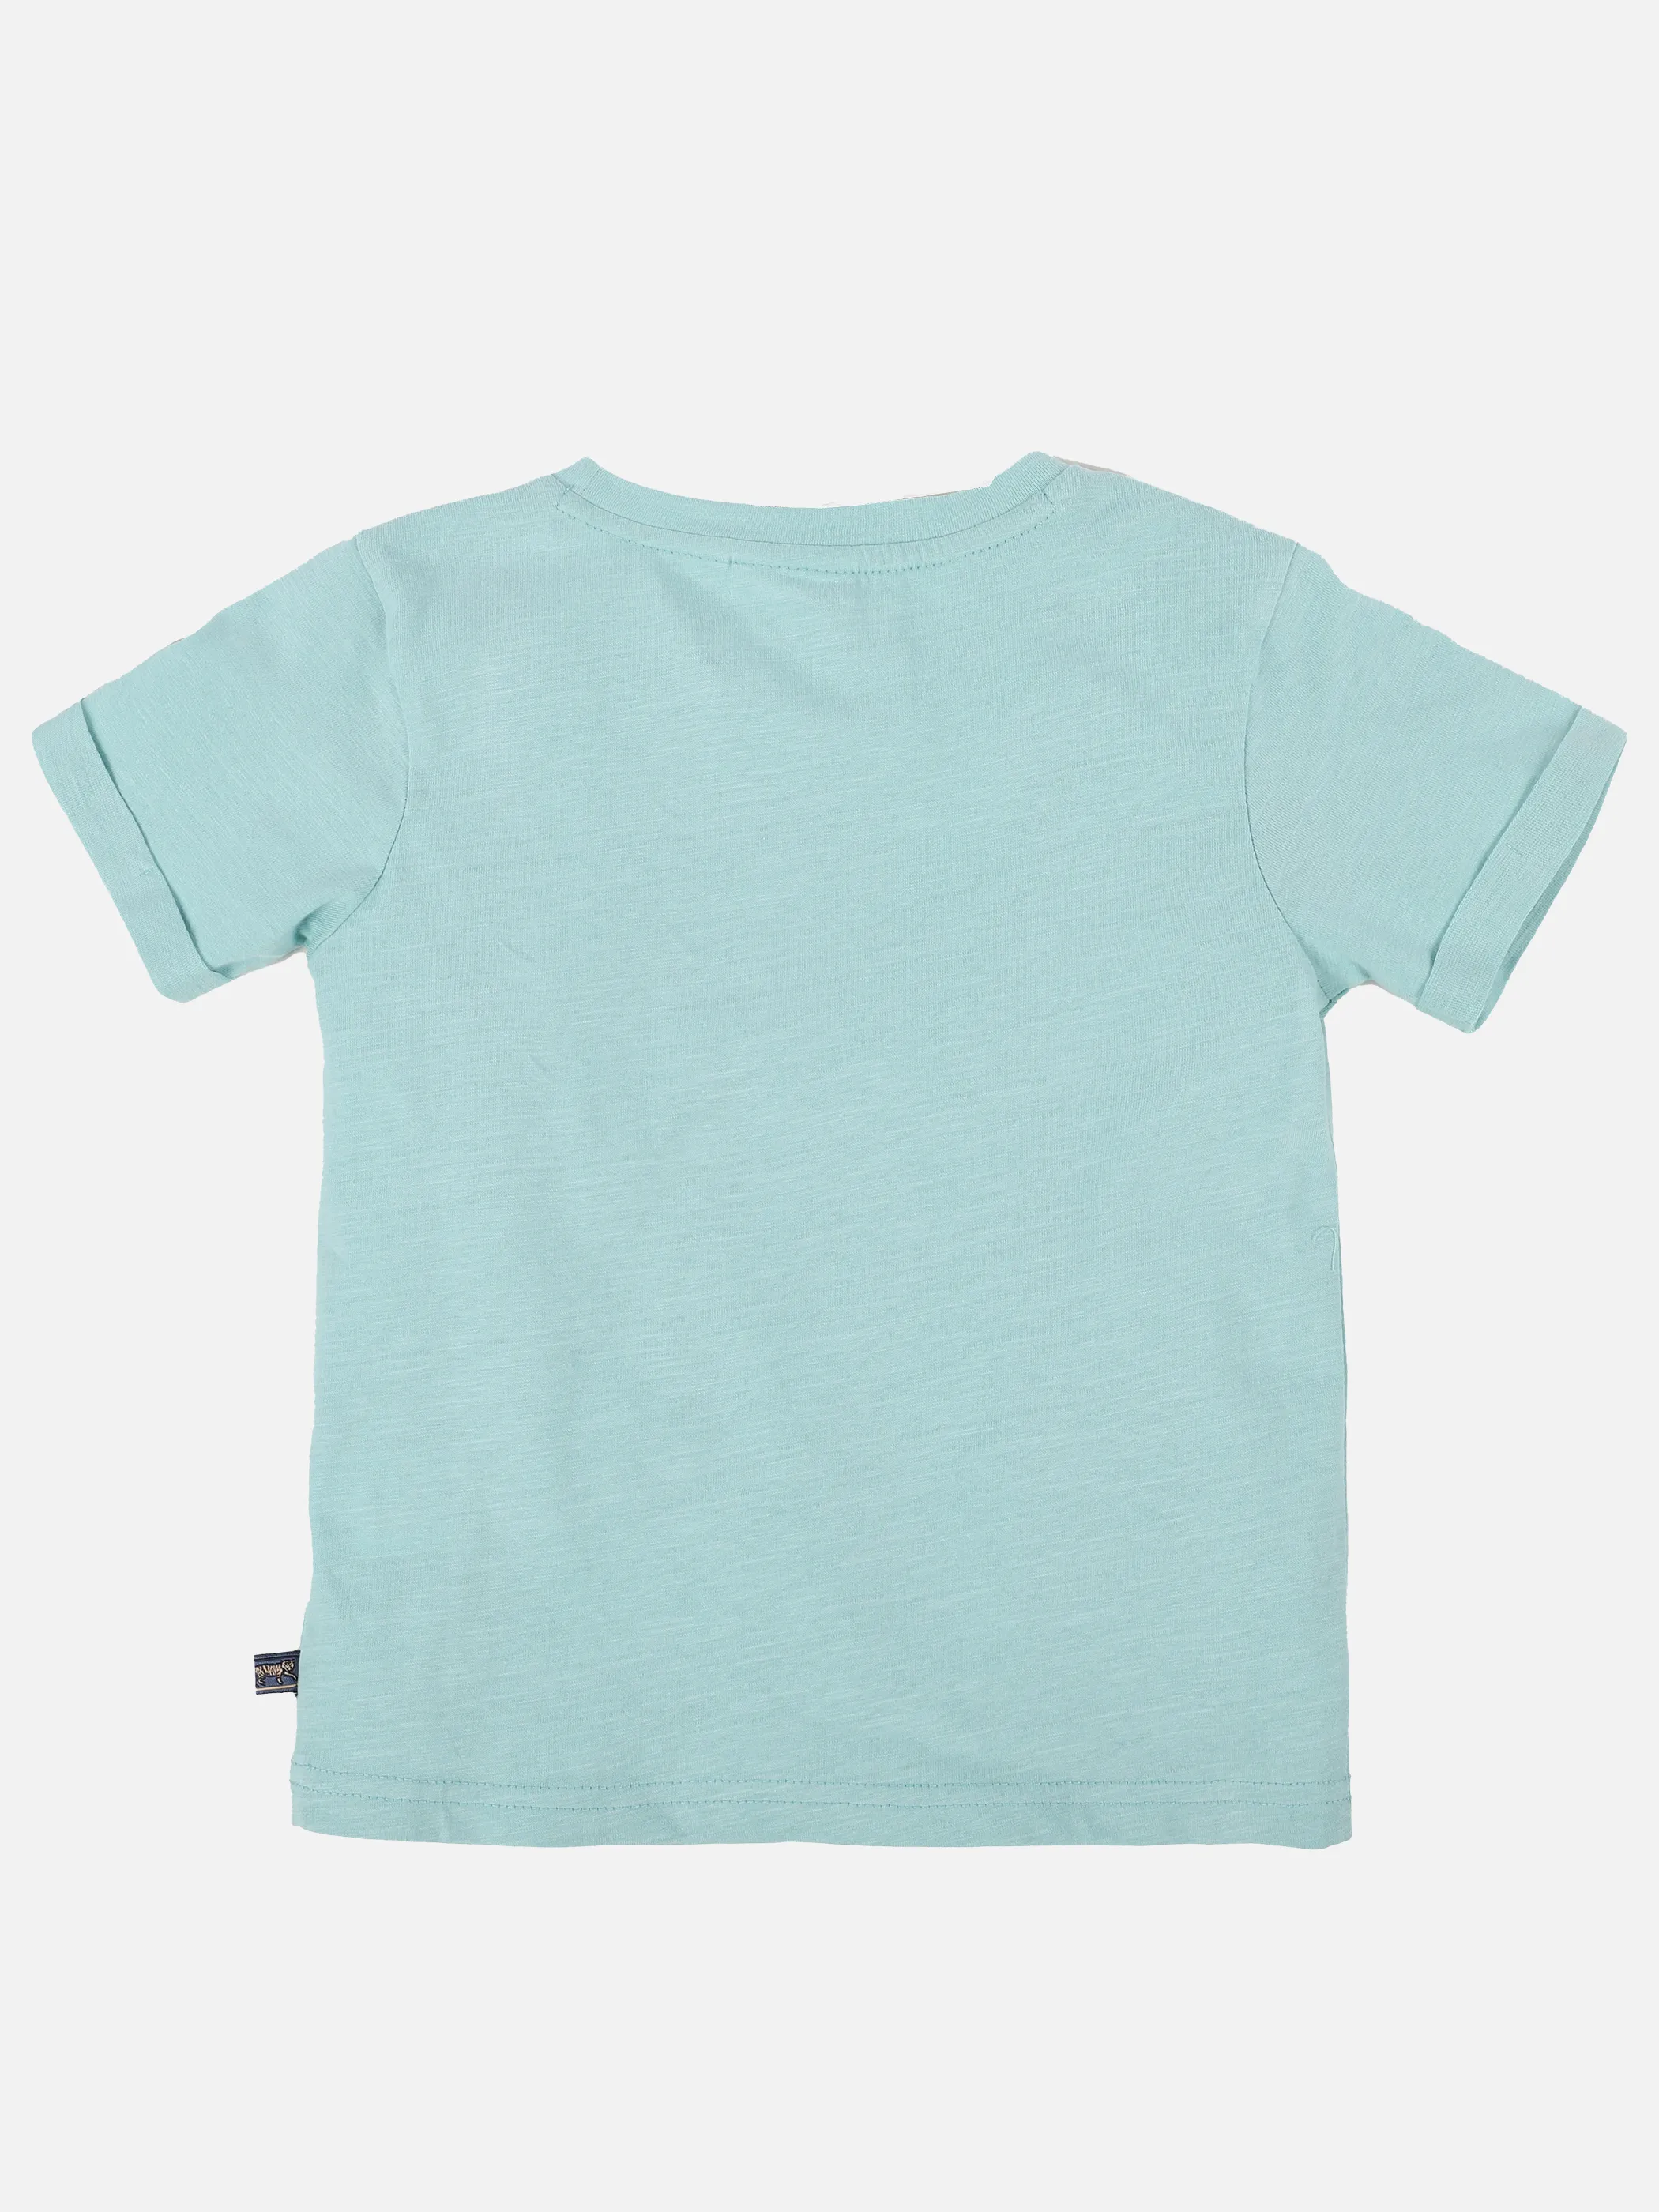 Stop + Go KJ T-Shirt mit Frontdruck in blau Blau 891518 BLAU 2